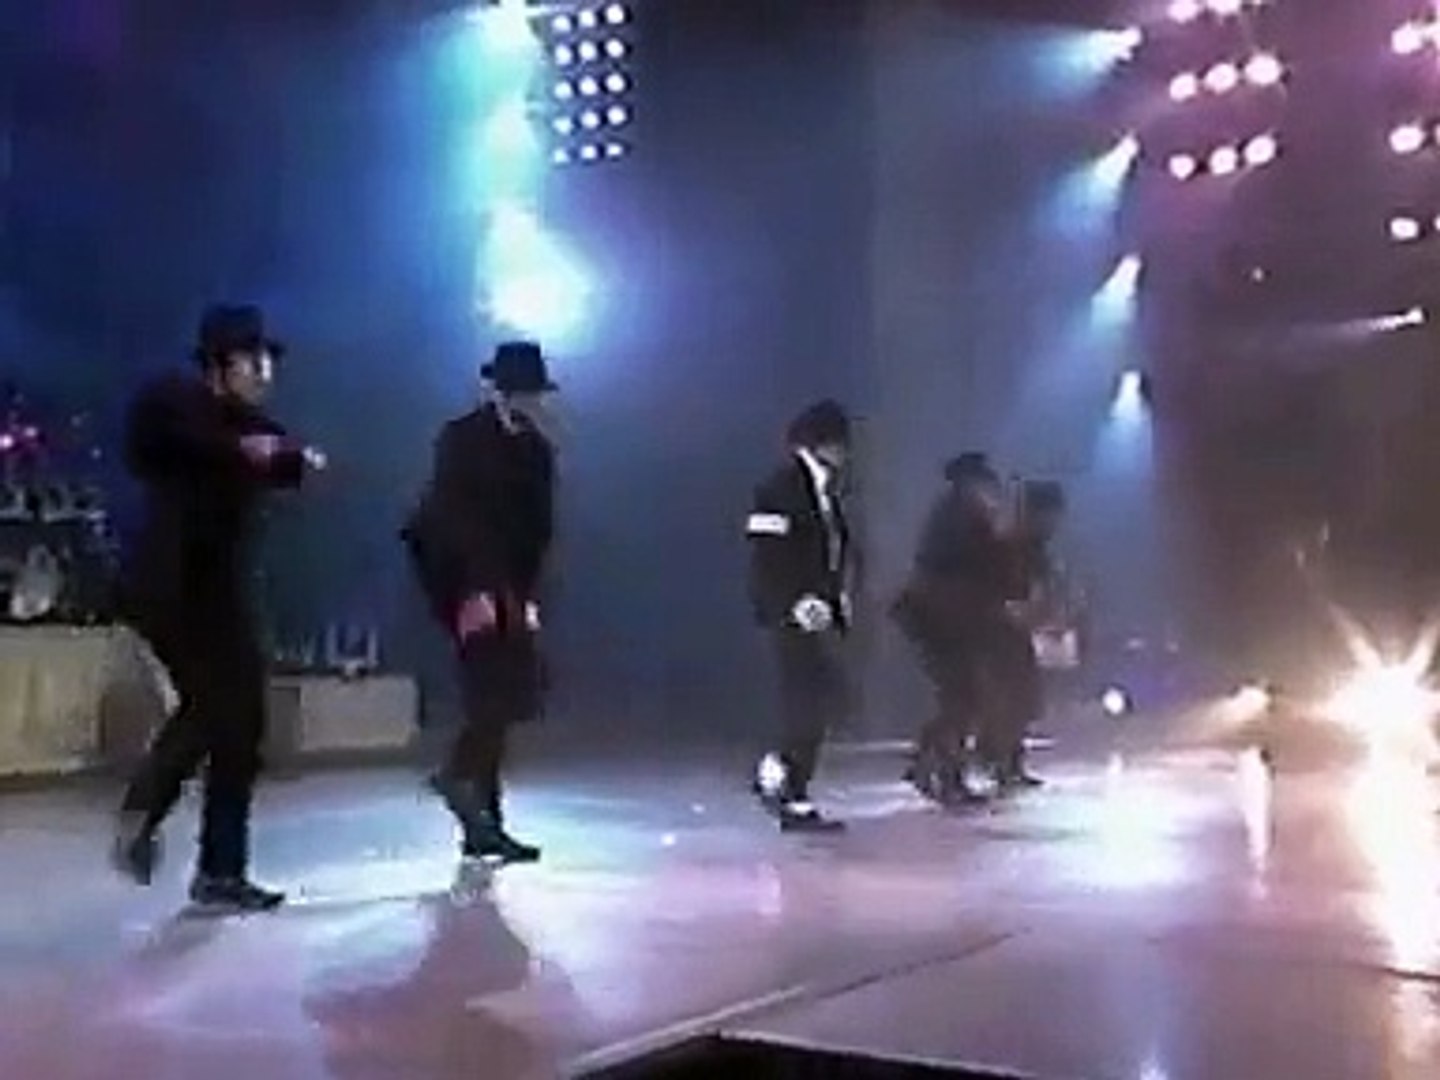 DANGEROUS album cd   music, songs, lyrics, CDs and playlists by Michael Jackson     nuTsie com